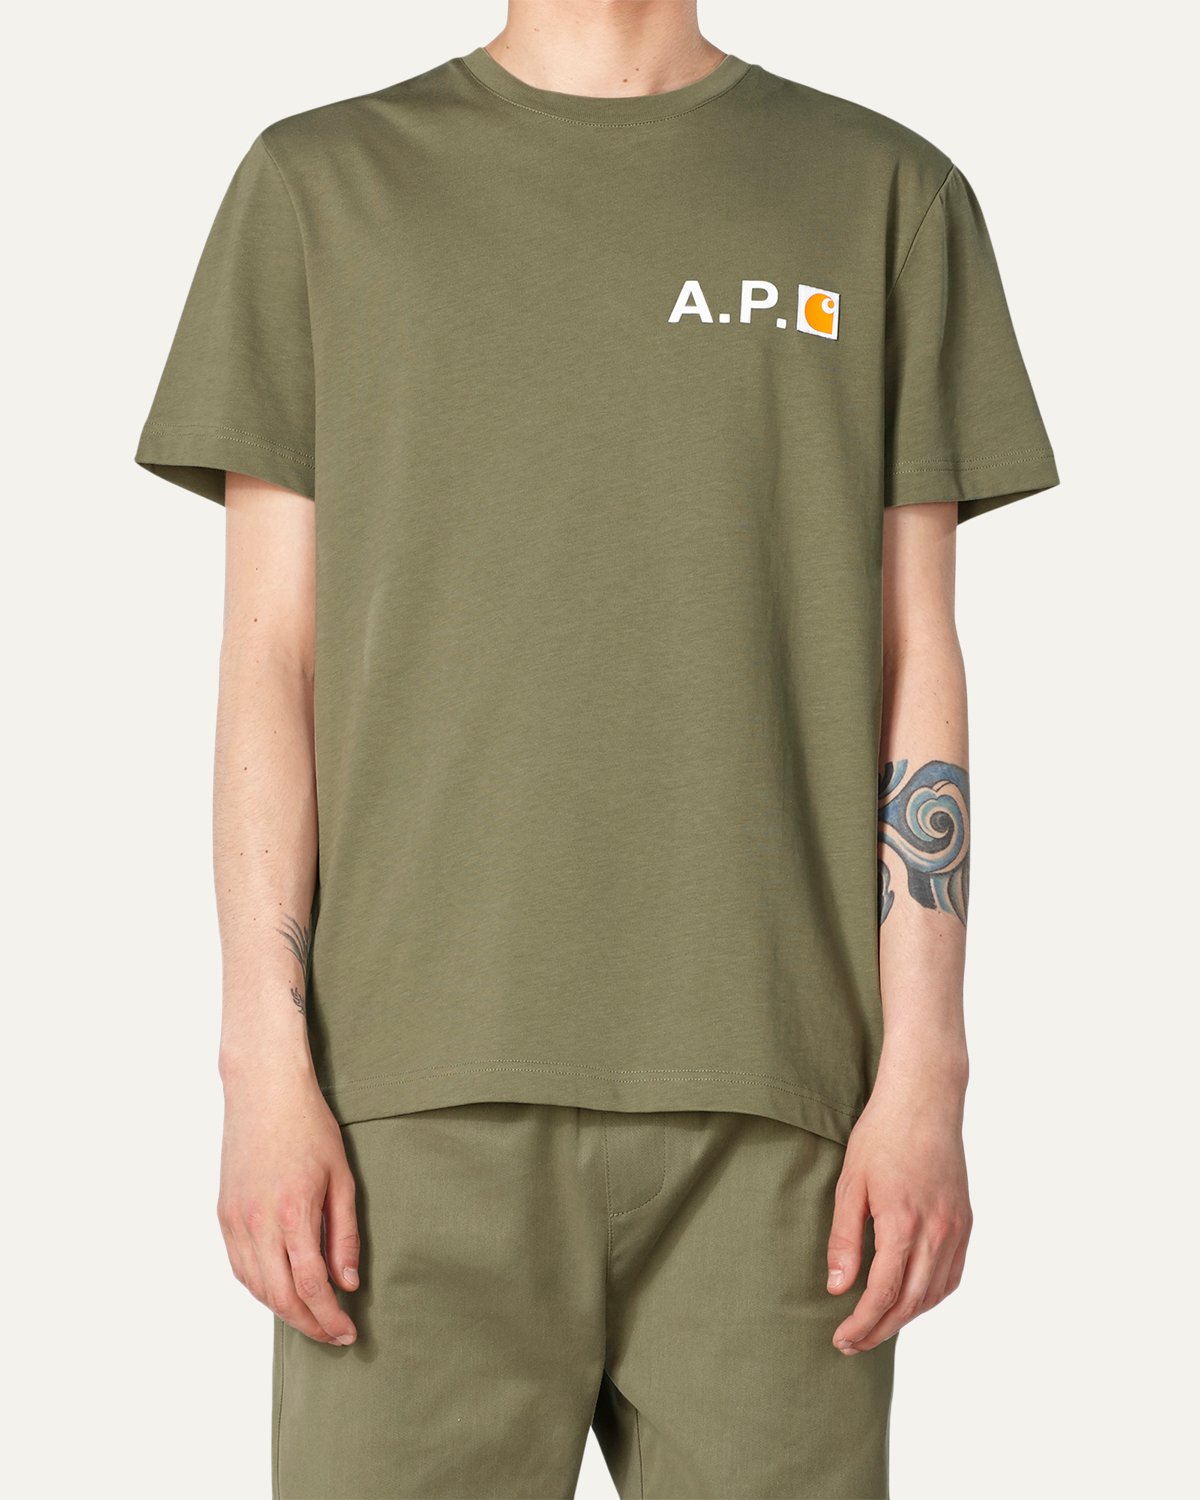 A.P.C. x Carhartt WIP - Fire T-Shirt Khaki - Tops - Green - Image 2